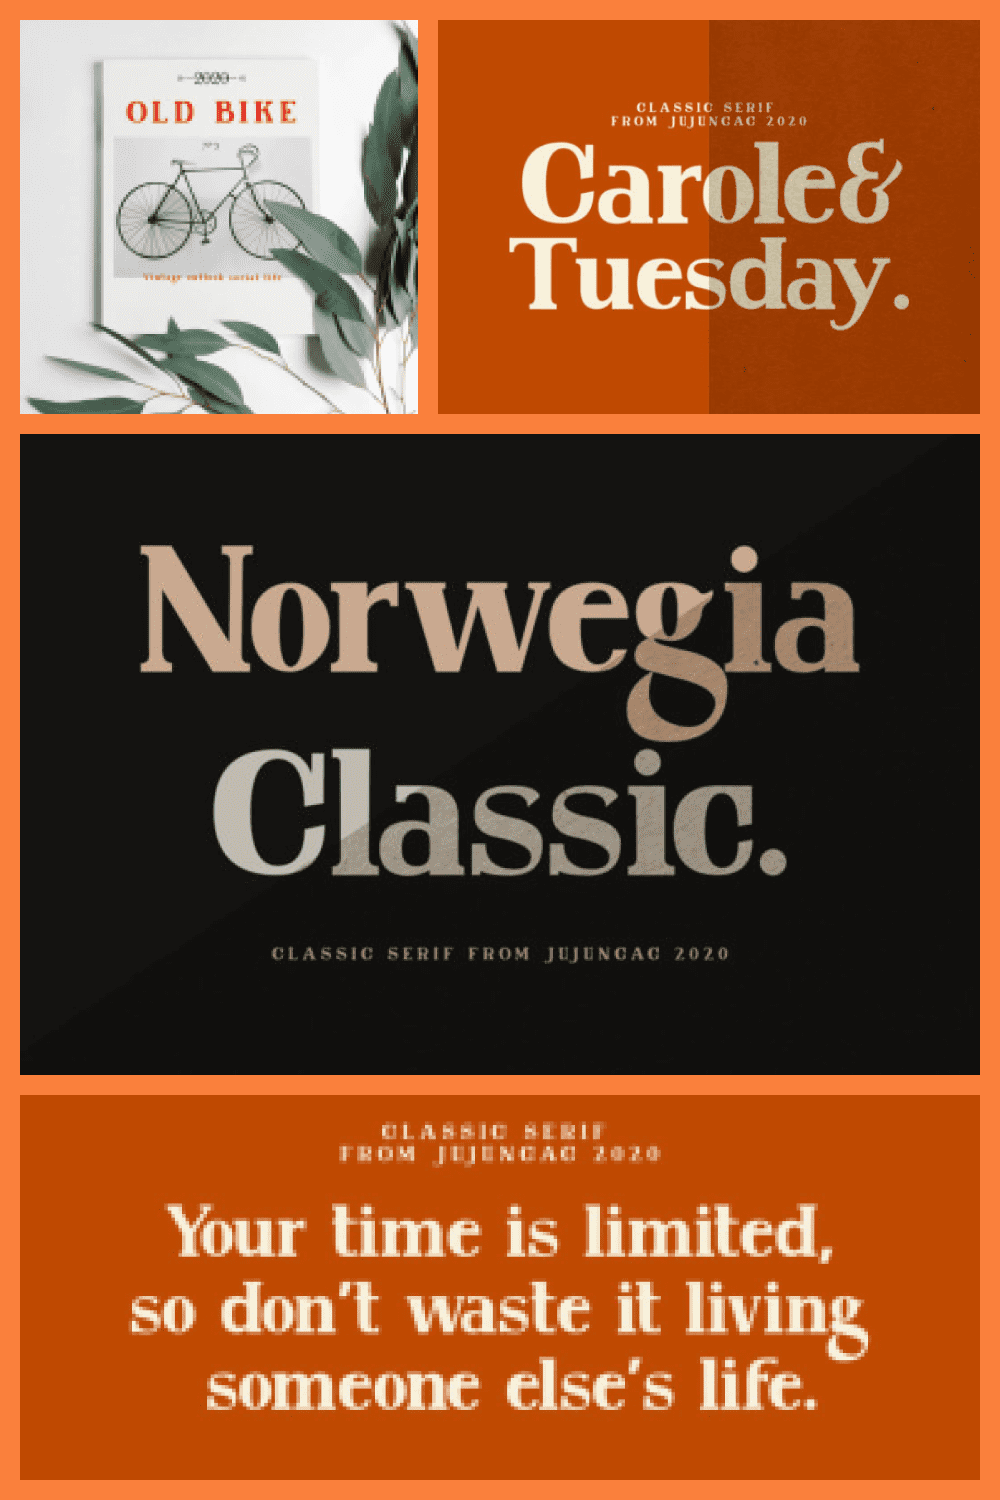 Norwegia Classic Lettered Serif Font - MasterBundles - Pinterest Collage Image.